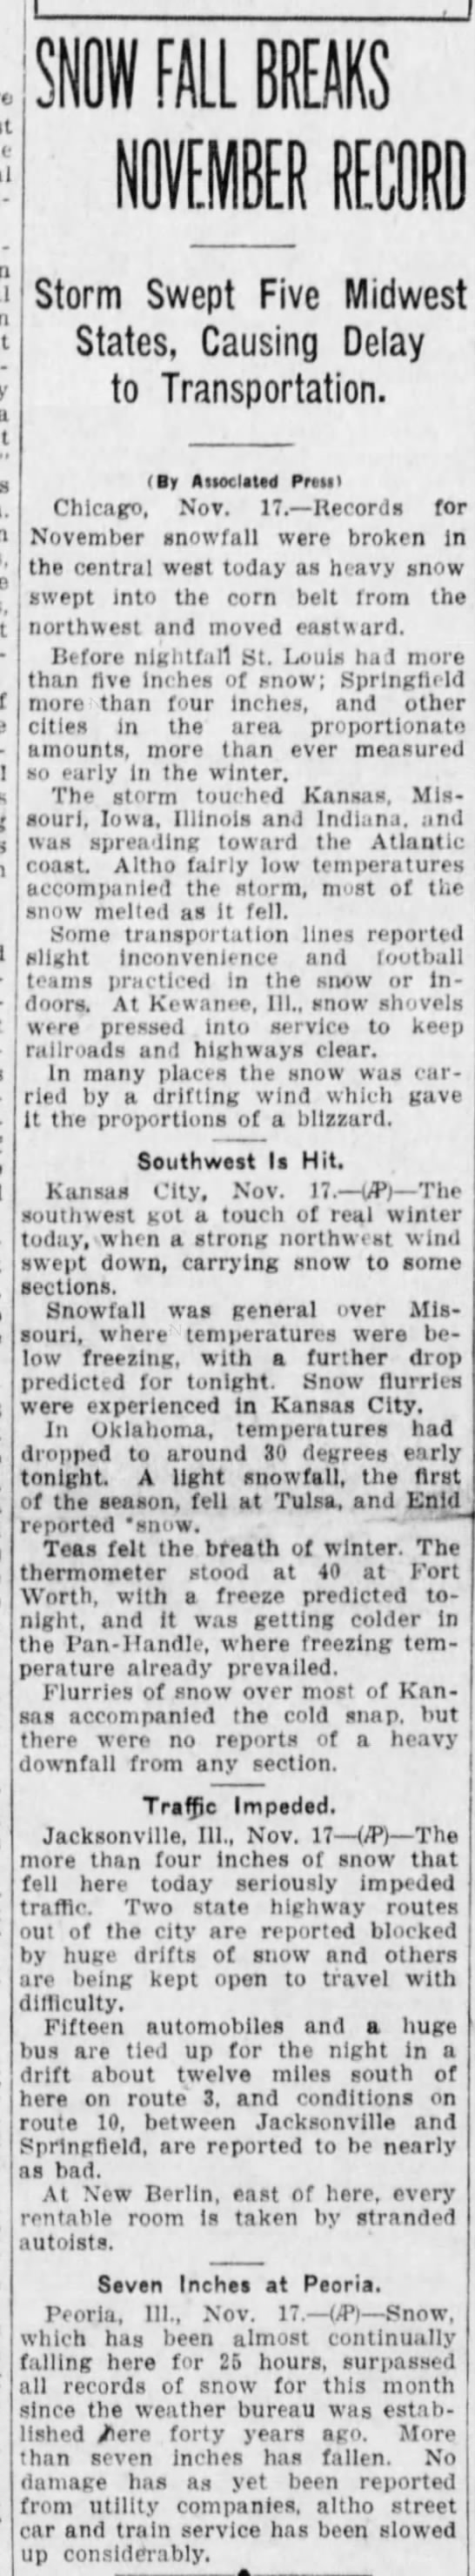 snow, November 17, 1926 - 